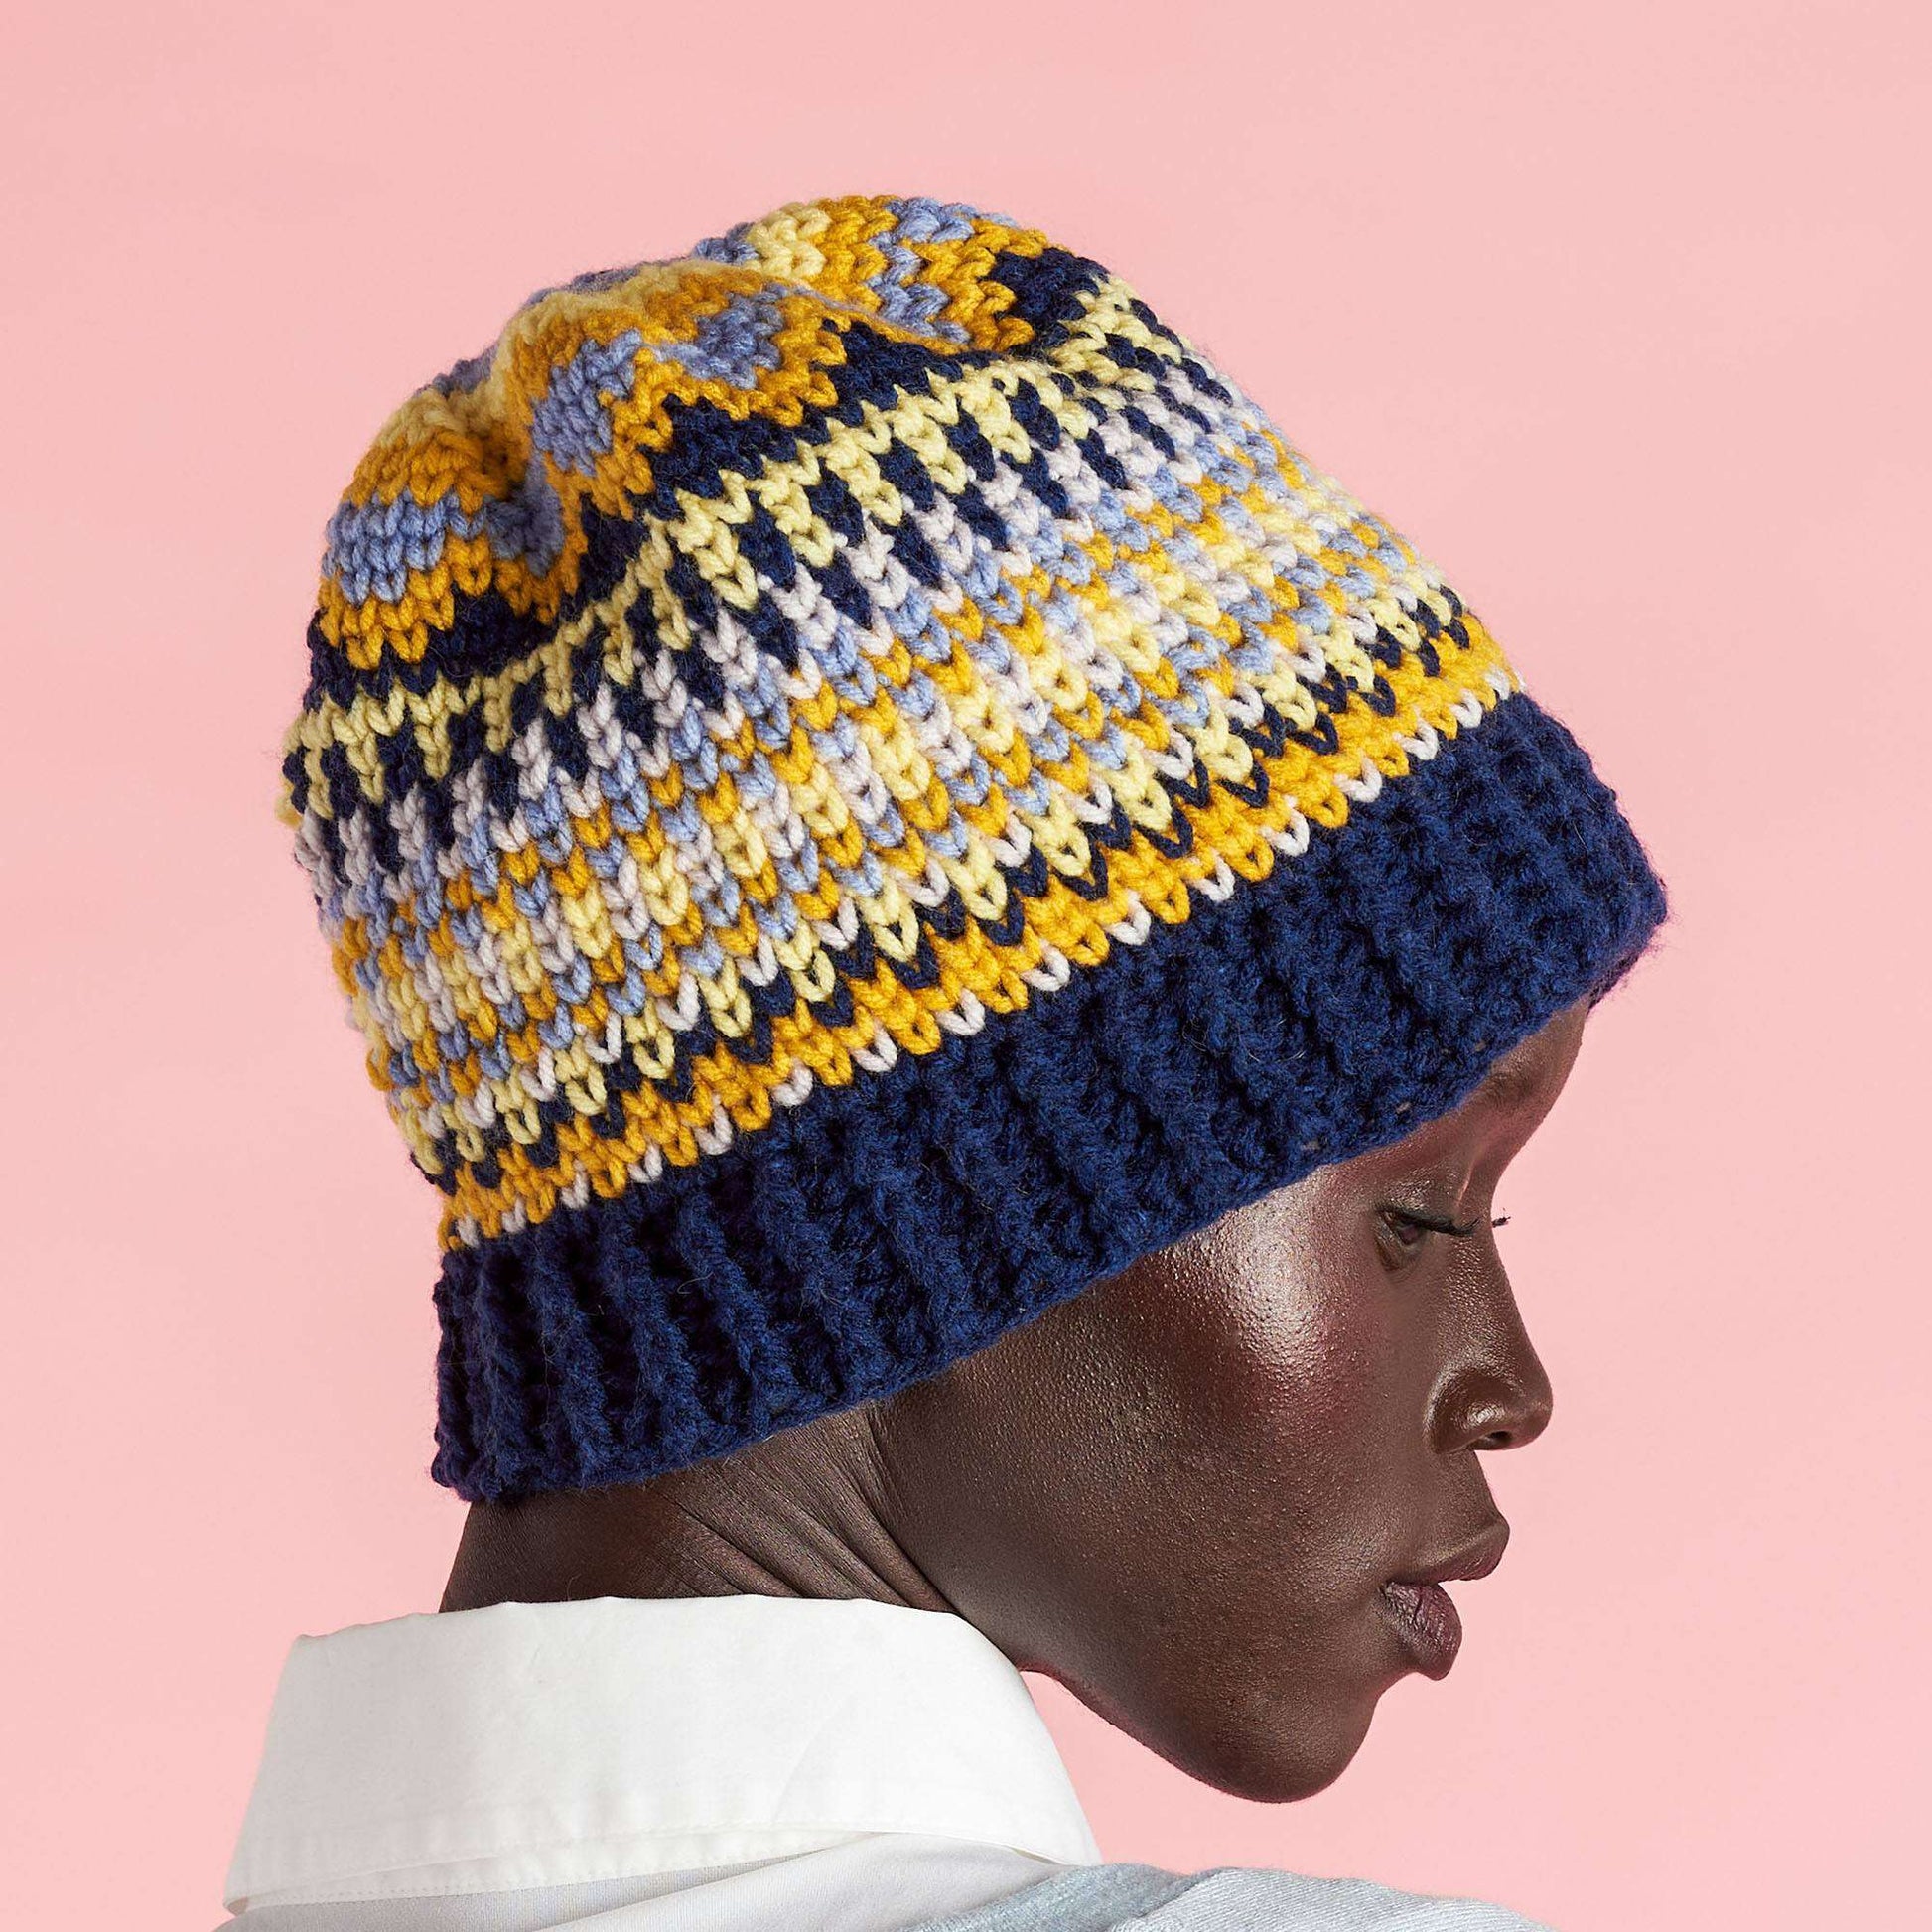 Caron Crochet Colorwork Hat Single Size